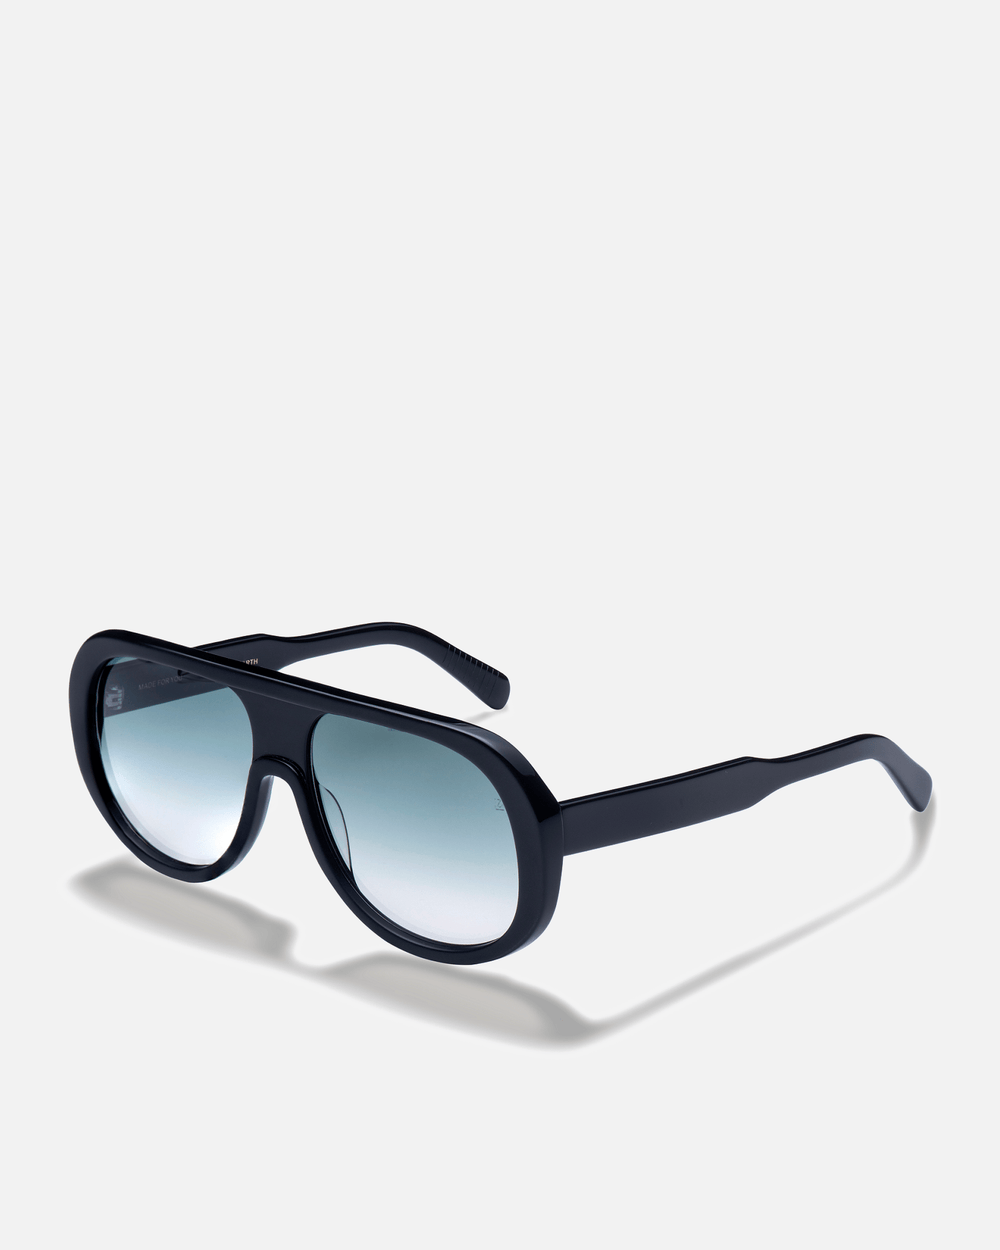 JALAPENO Bio-Acetate Wayfarer Frame Sunglasses for Men & Women | Black | Sunnies Collection | OLLU